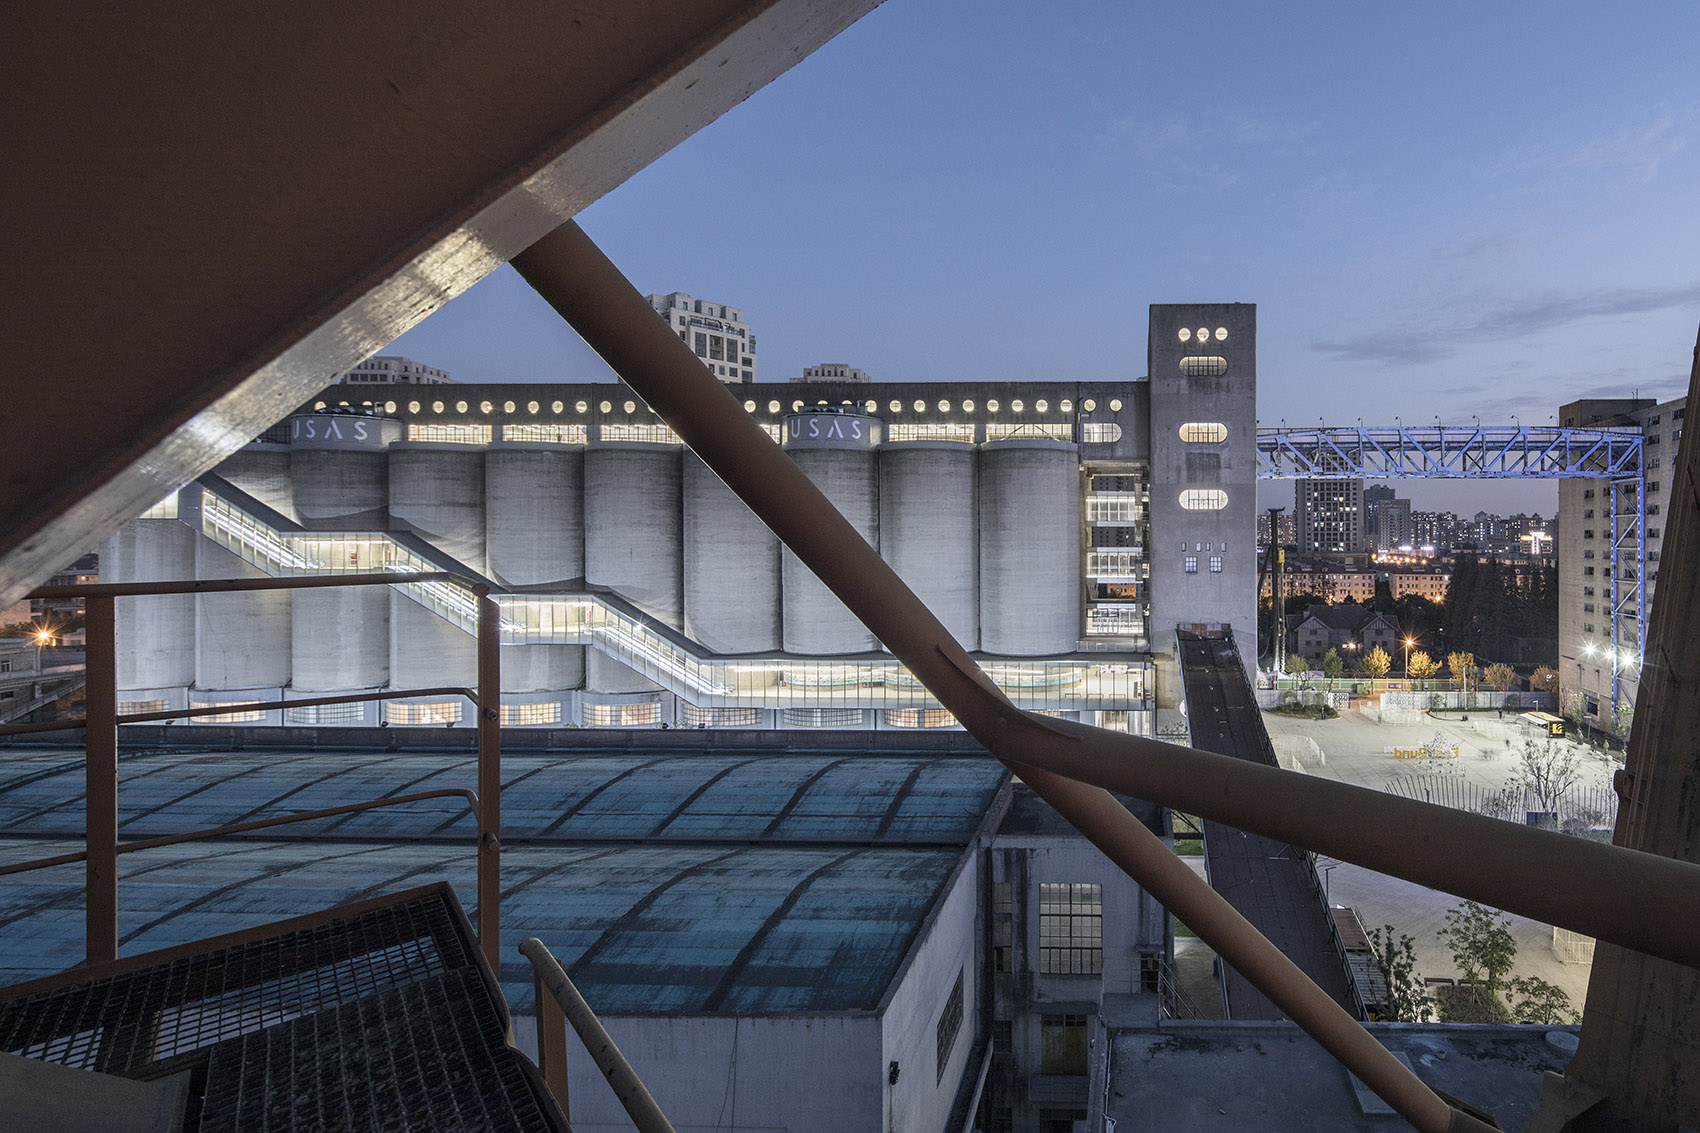 002-renovation-of-80000-ton-silos-on-minsheng-wharf-china-by-atelier-deshaus.jpg